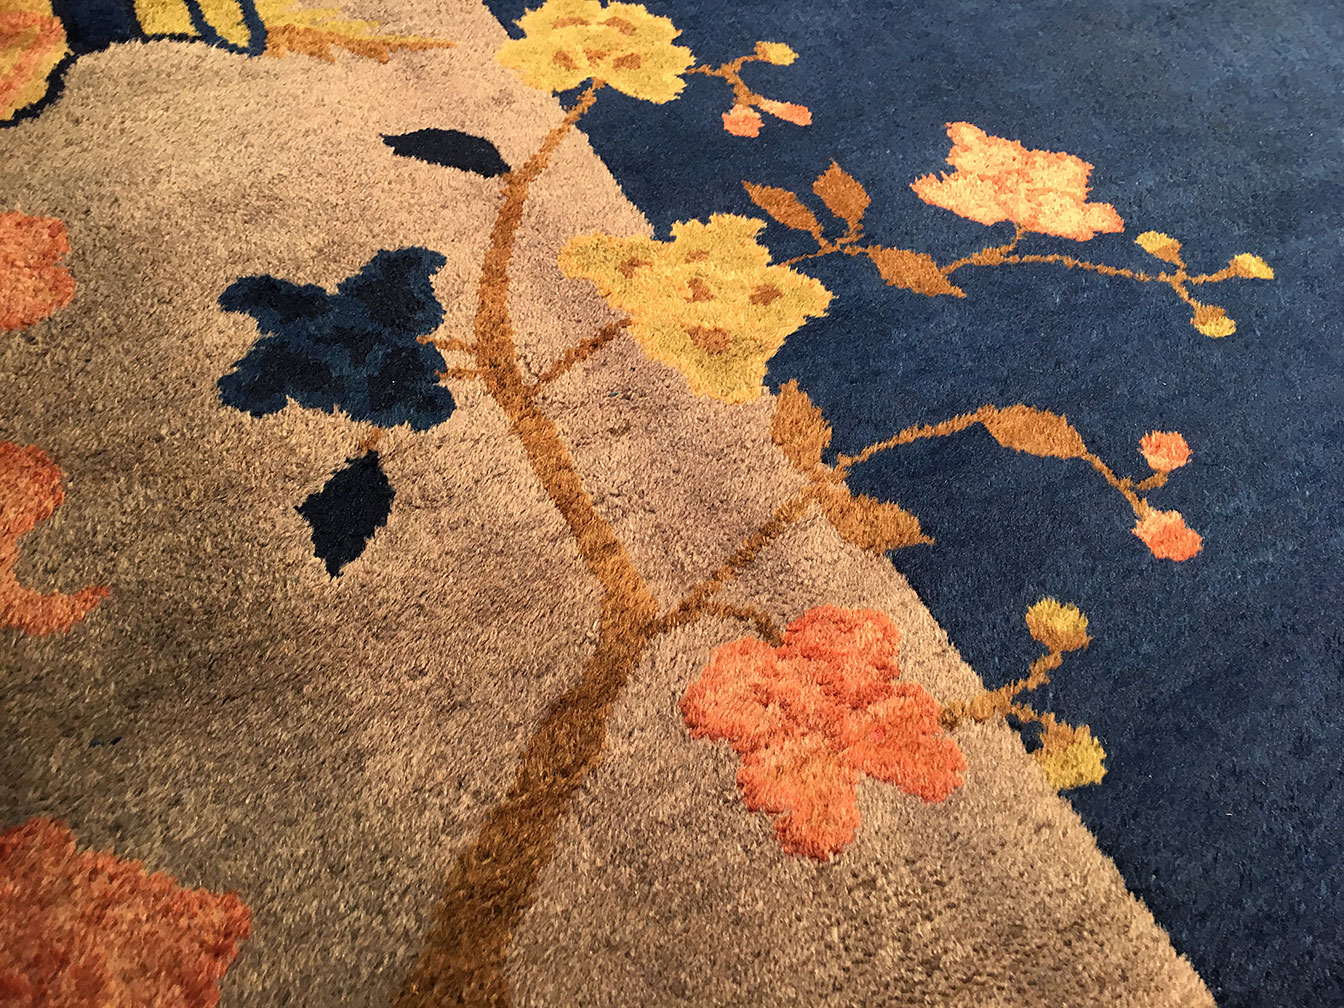 Antique chinese Carpet - # 52849